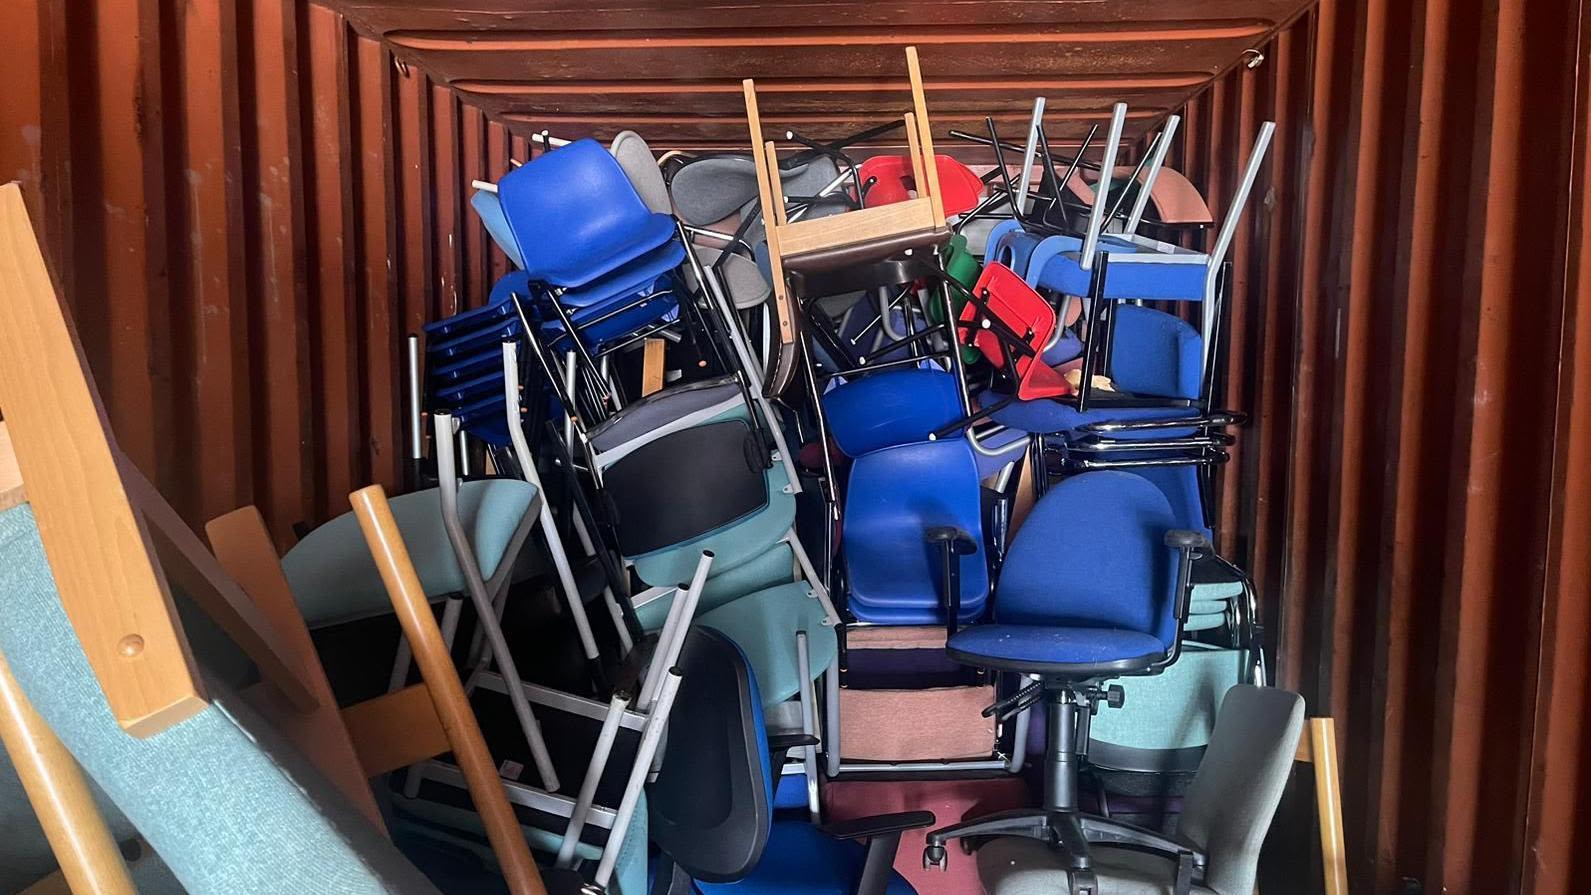 School furniture charity makes plea for donations